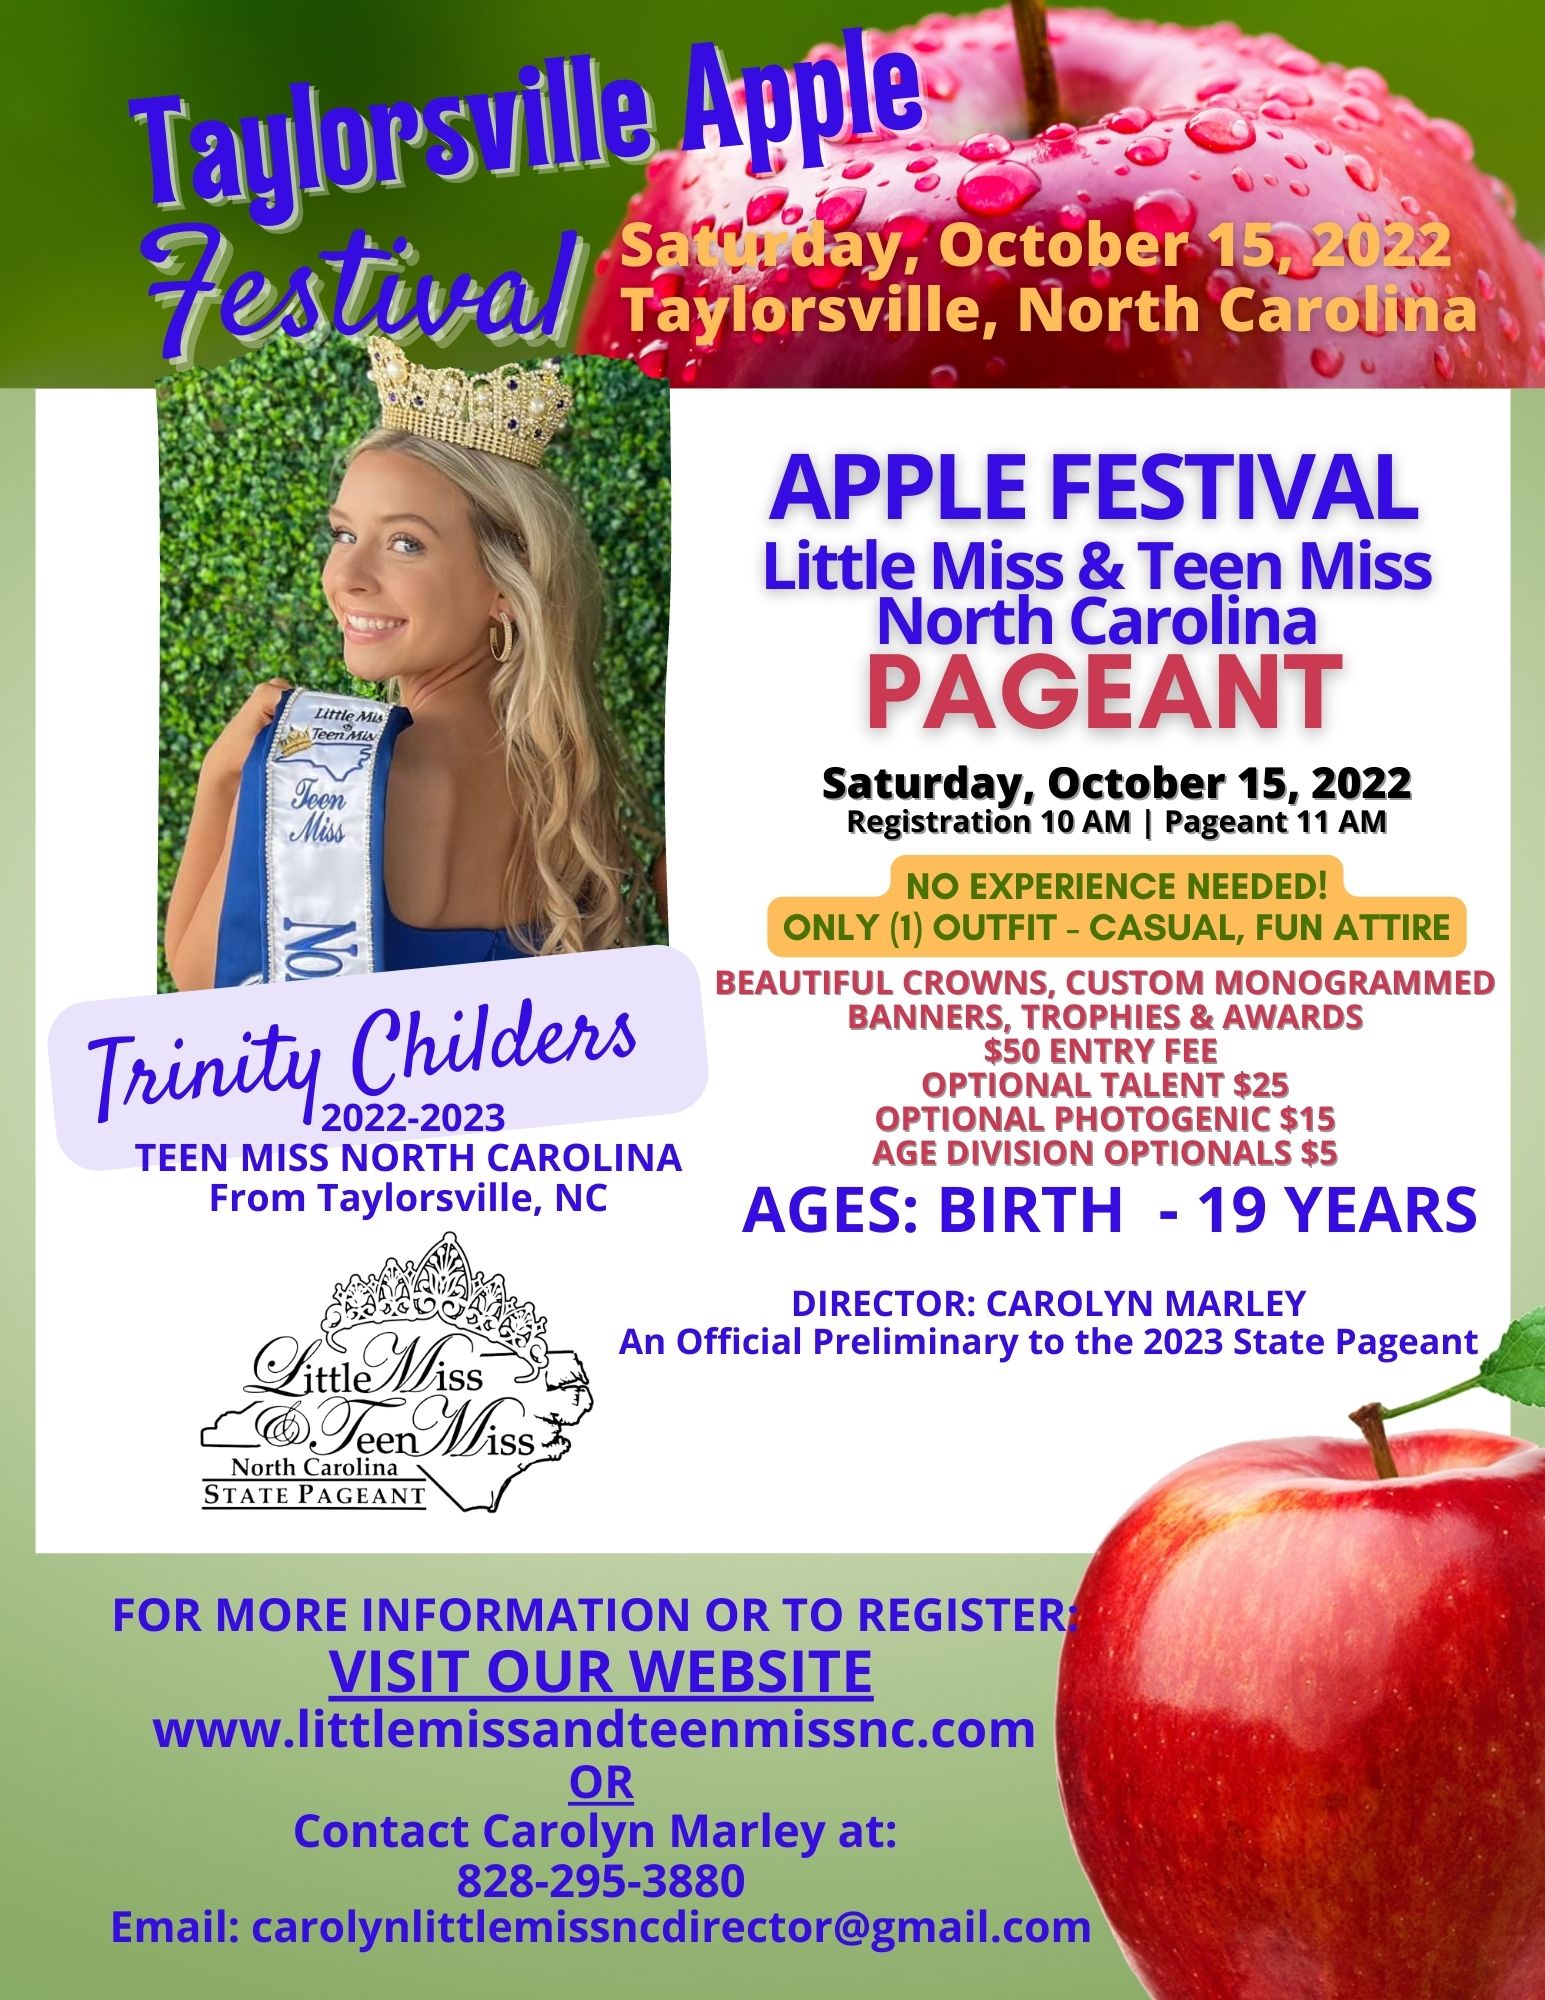 Taylorsville Apple Festival Alexander County Online Taylorsville, NC